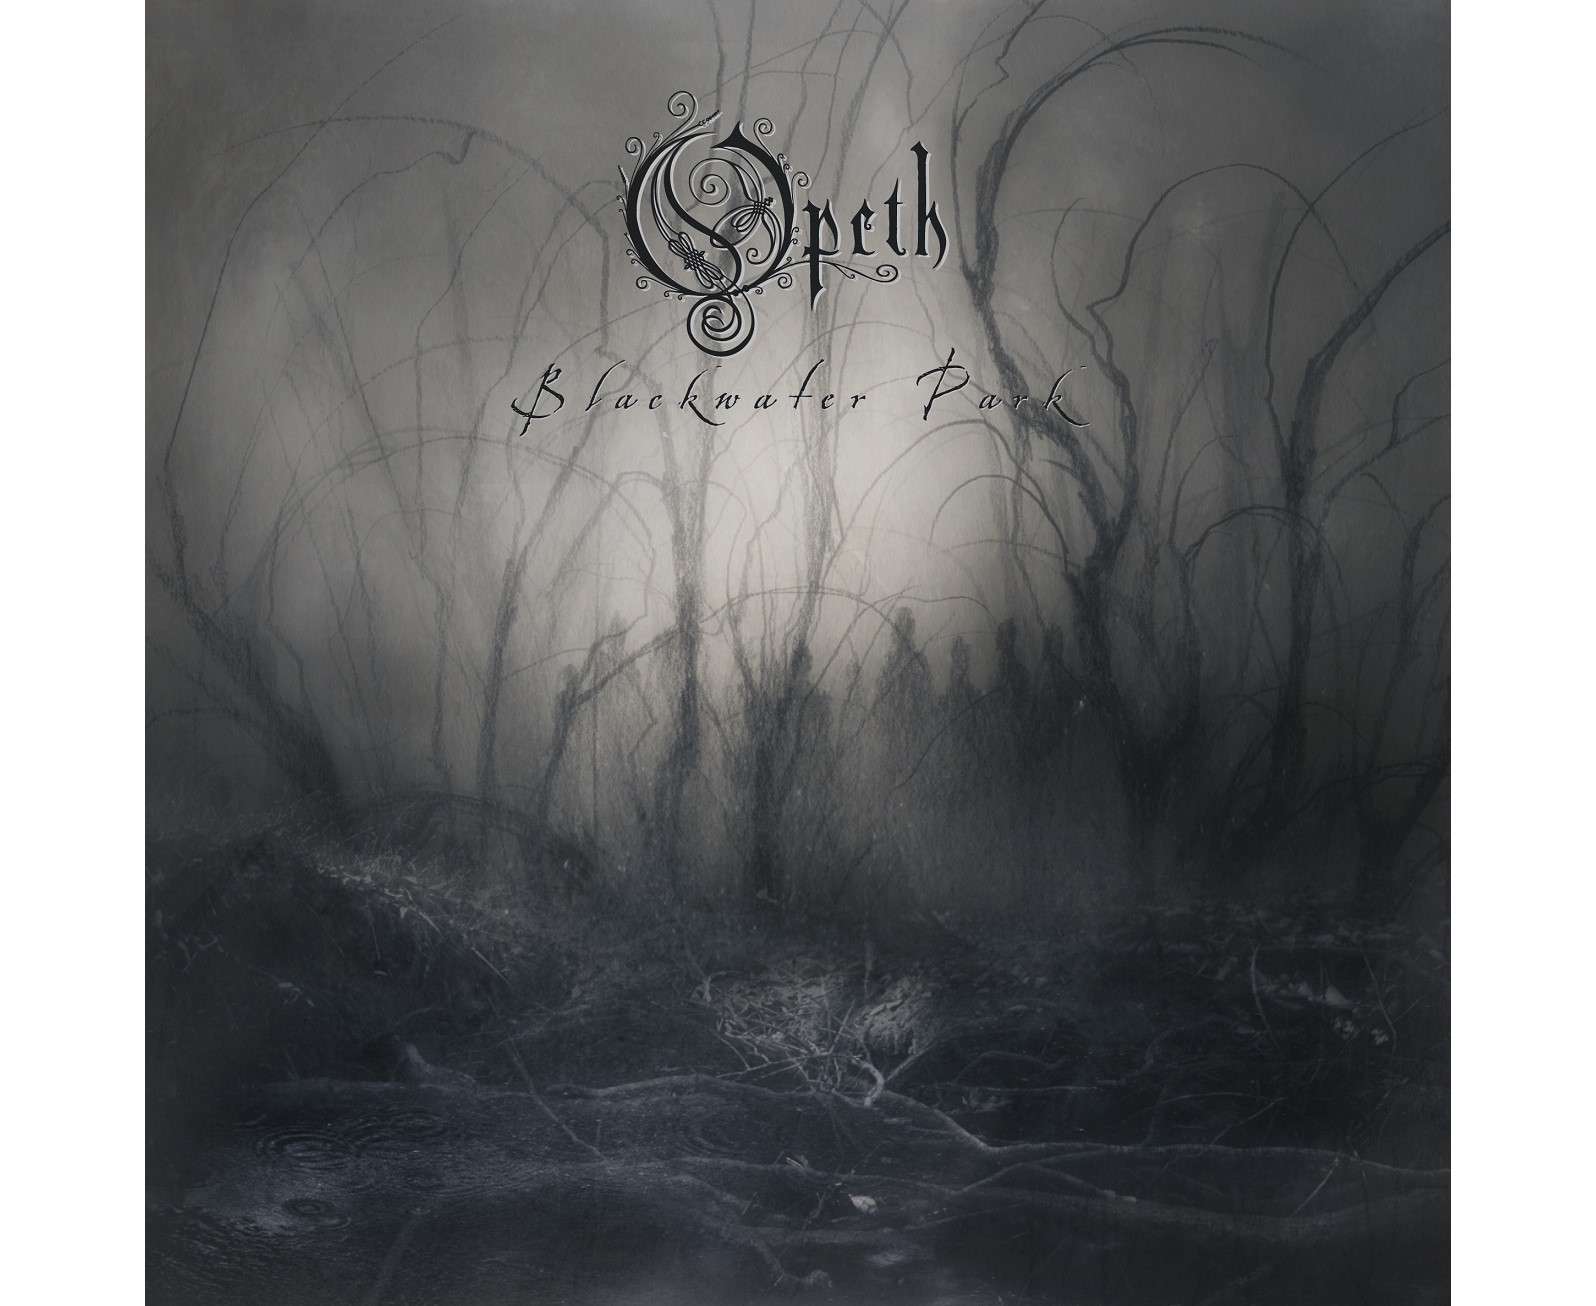 Opeth - Blackwater Park (20th Anniversary Edition) (180g) (White Vinyl) - 33RPM